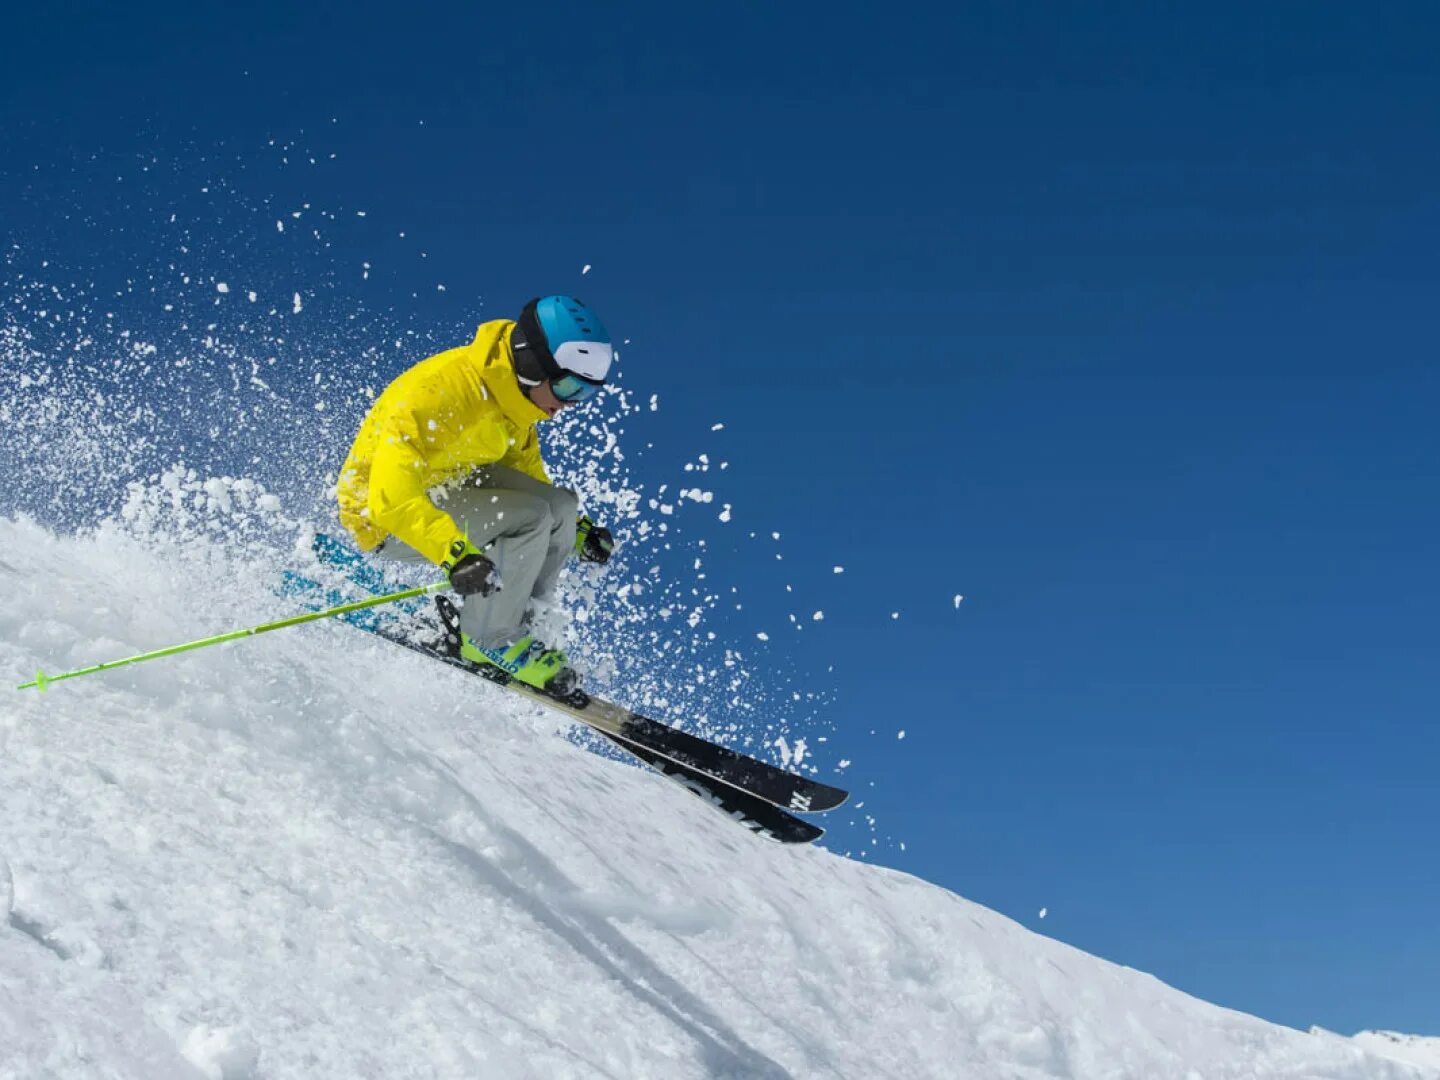 Лыжи on Ski. Skier Equipment. Skiing Gear. Equipment for Skiing. Ice skis